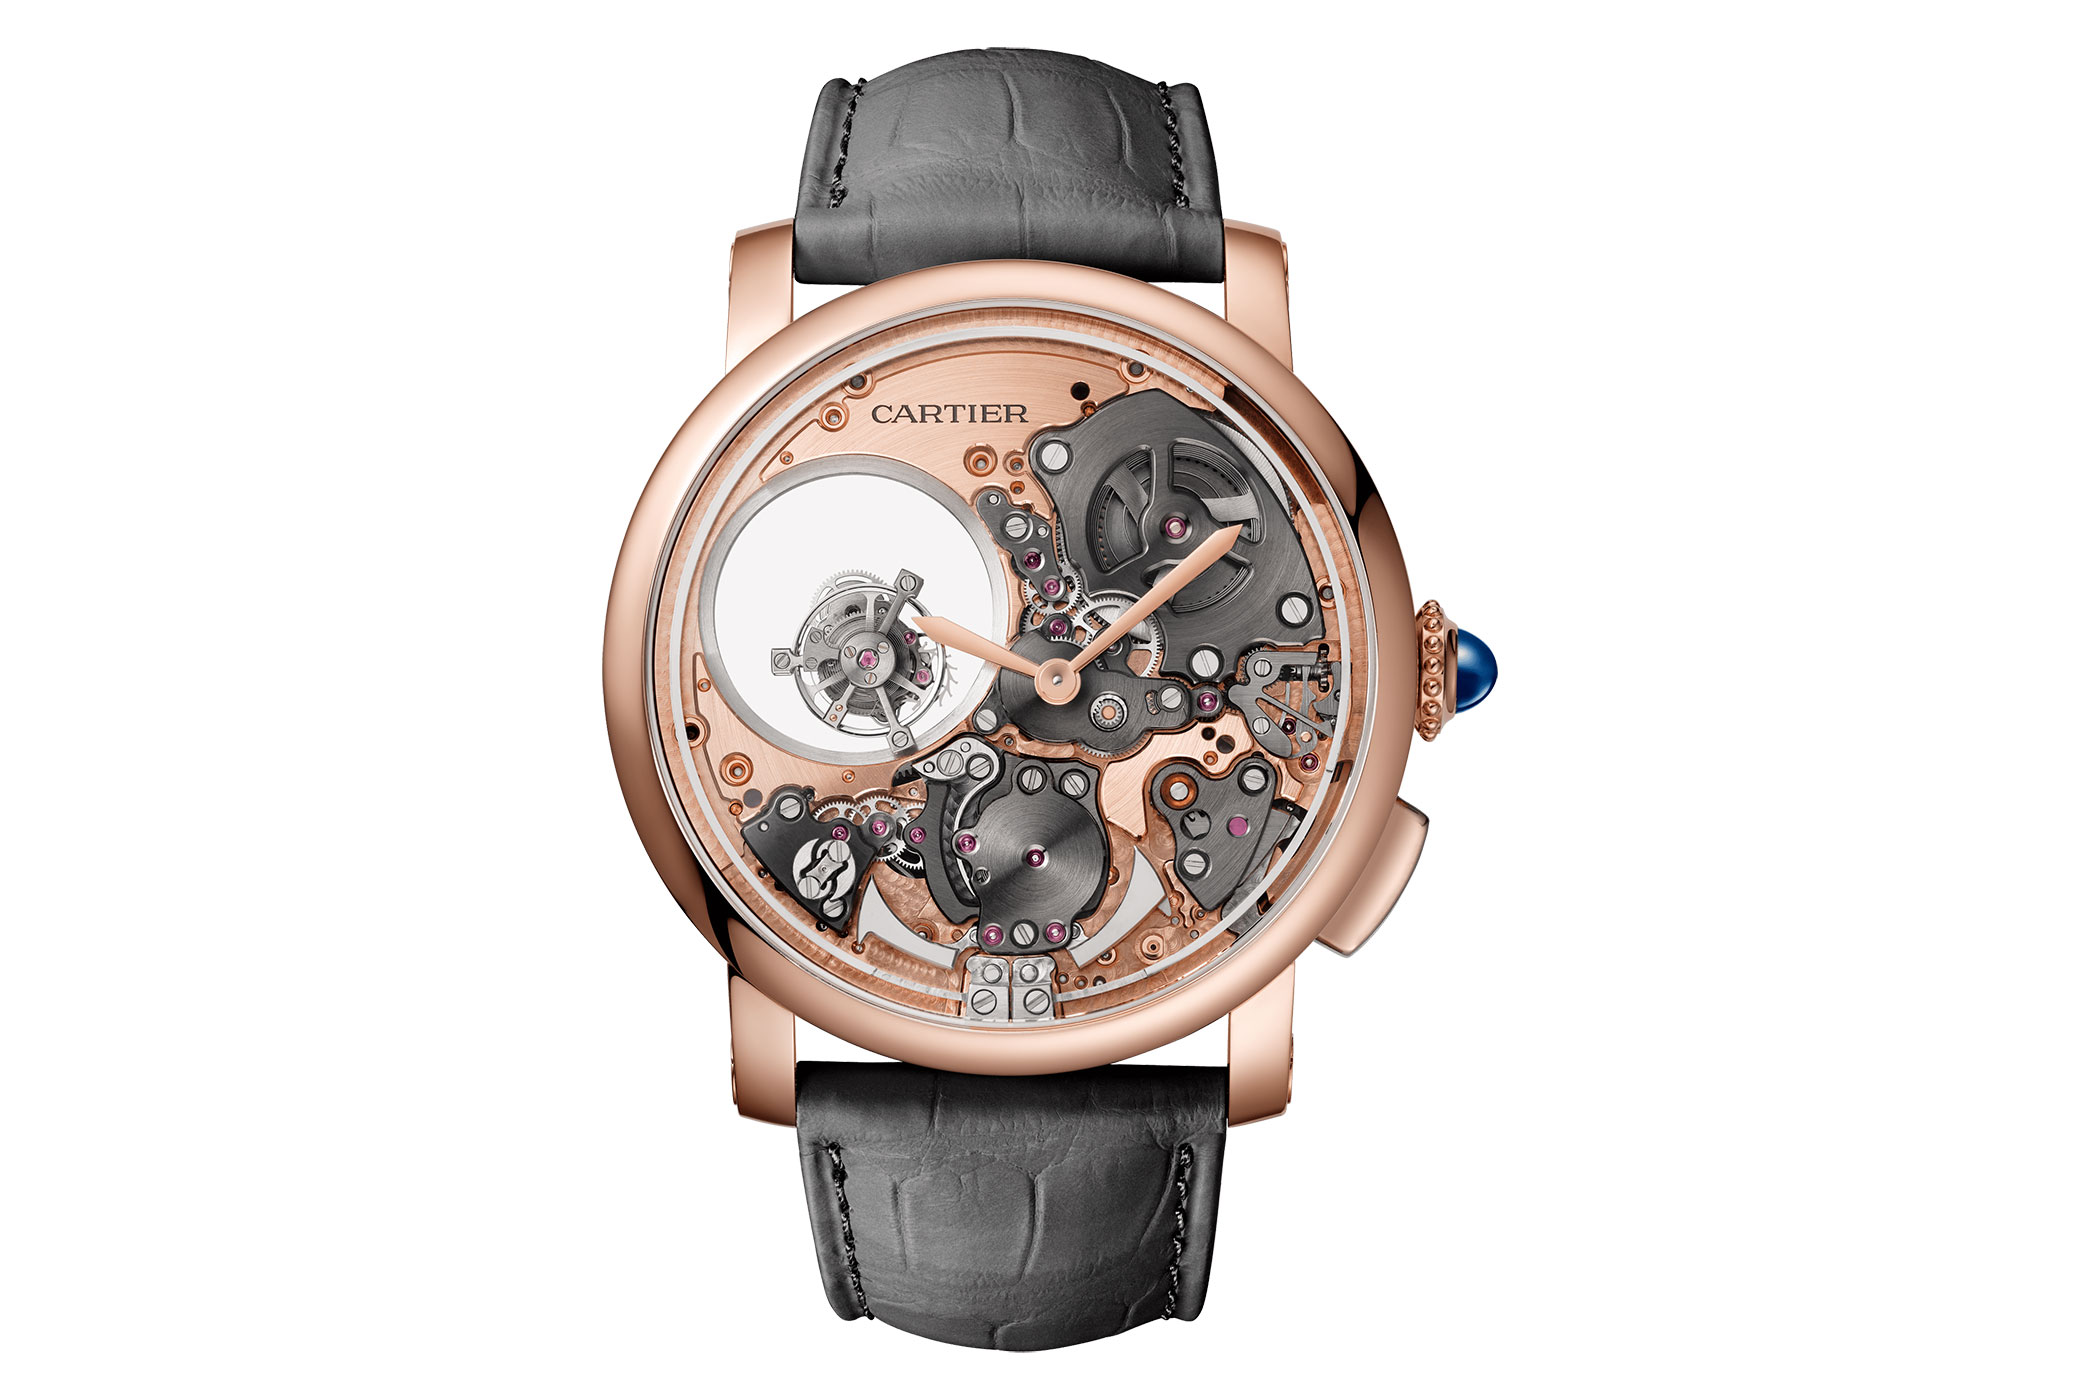 Cartier Rotonde de Cartier - Haute Horlogerie Watches